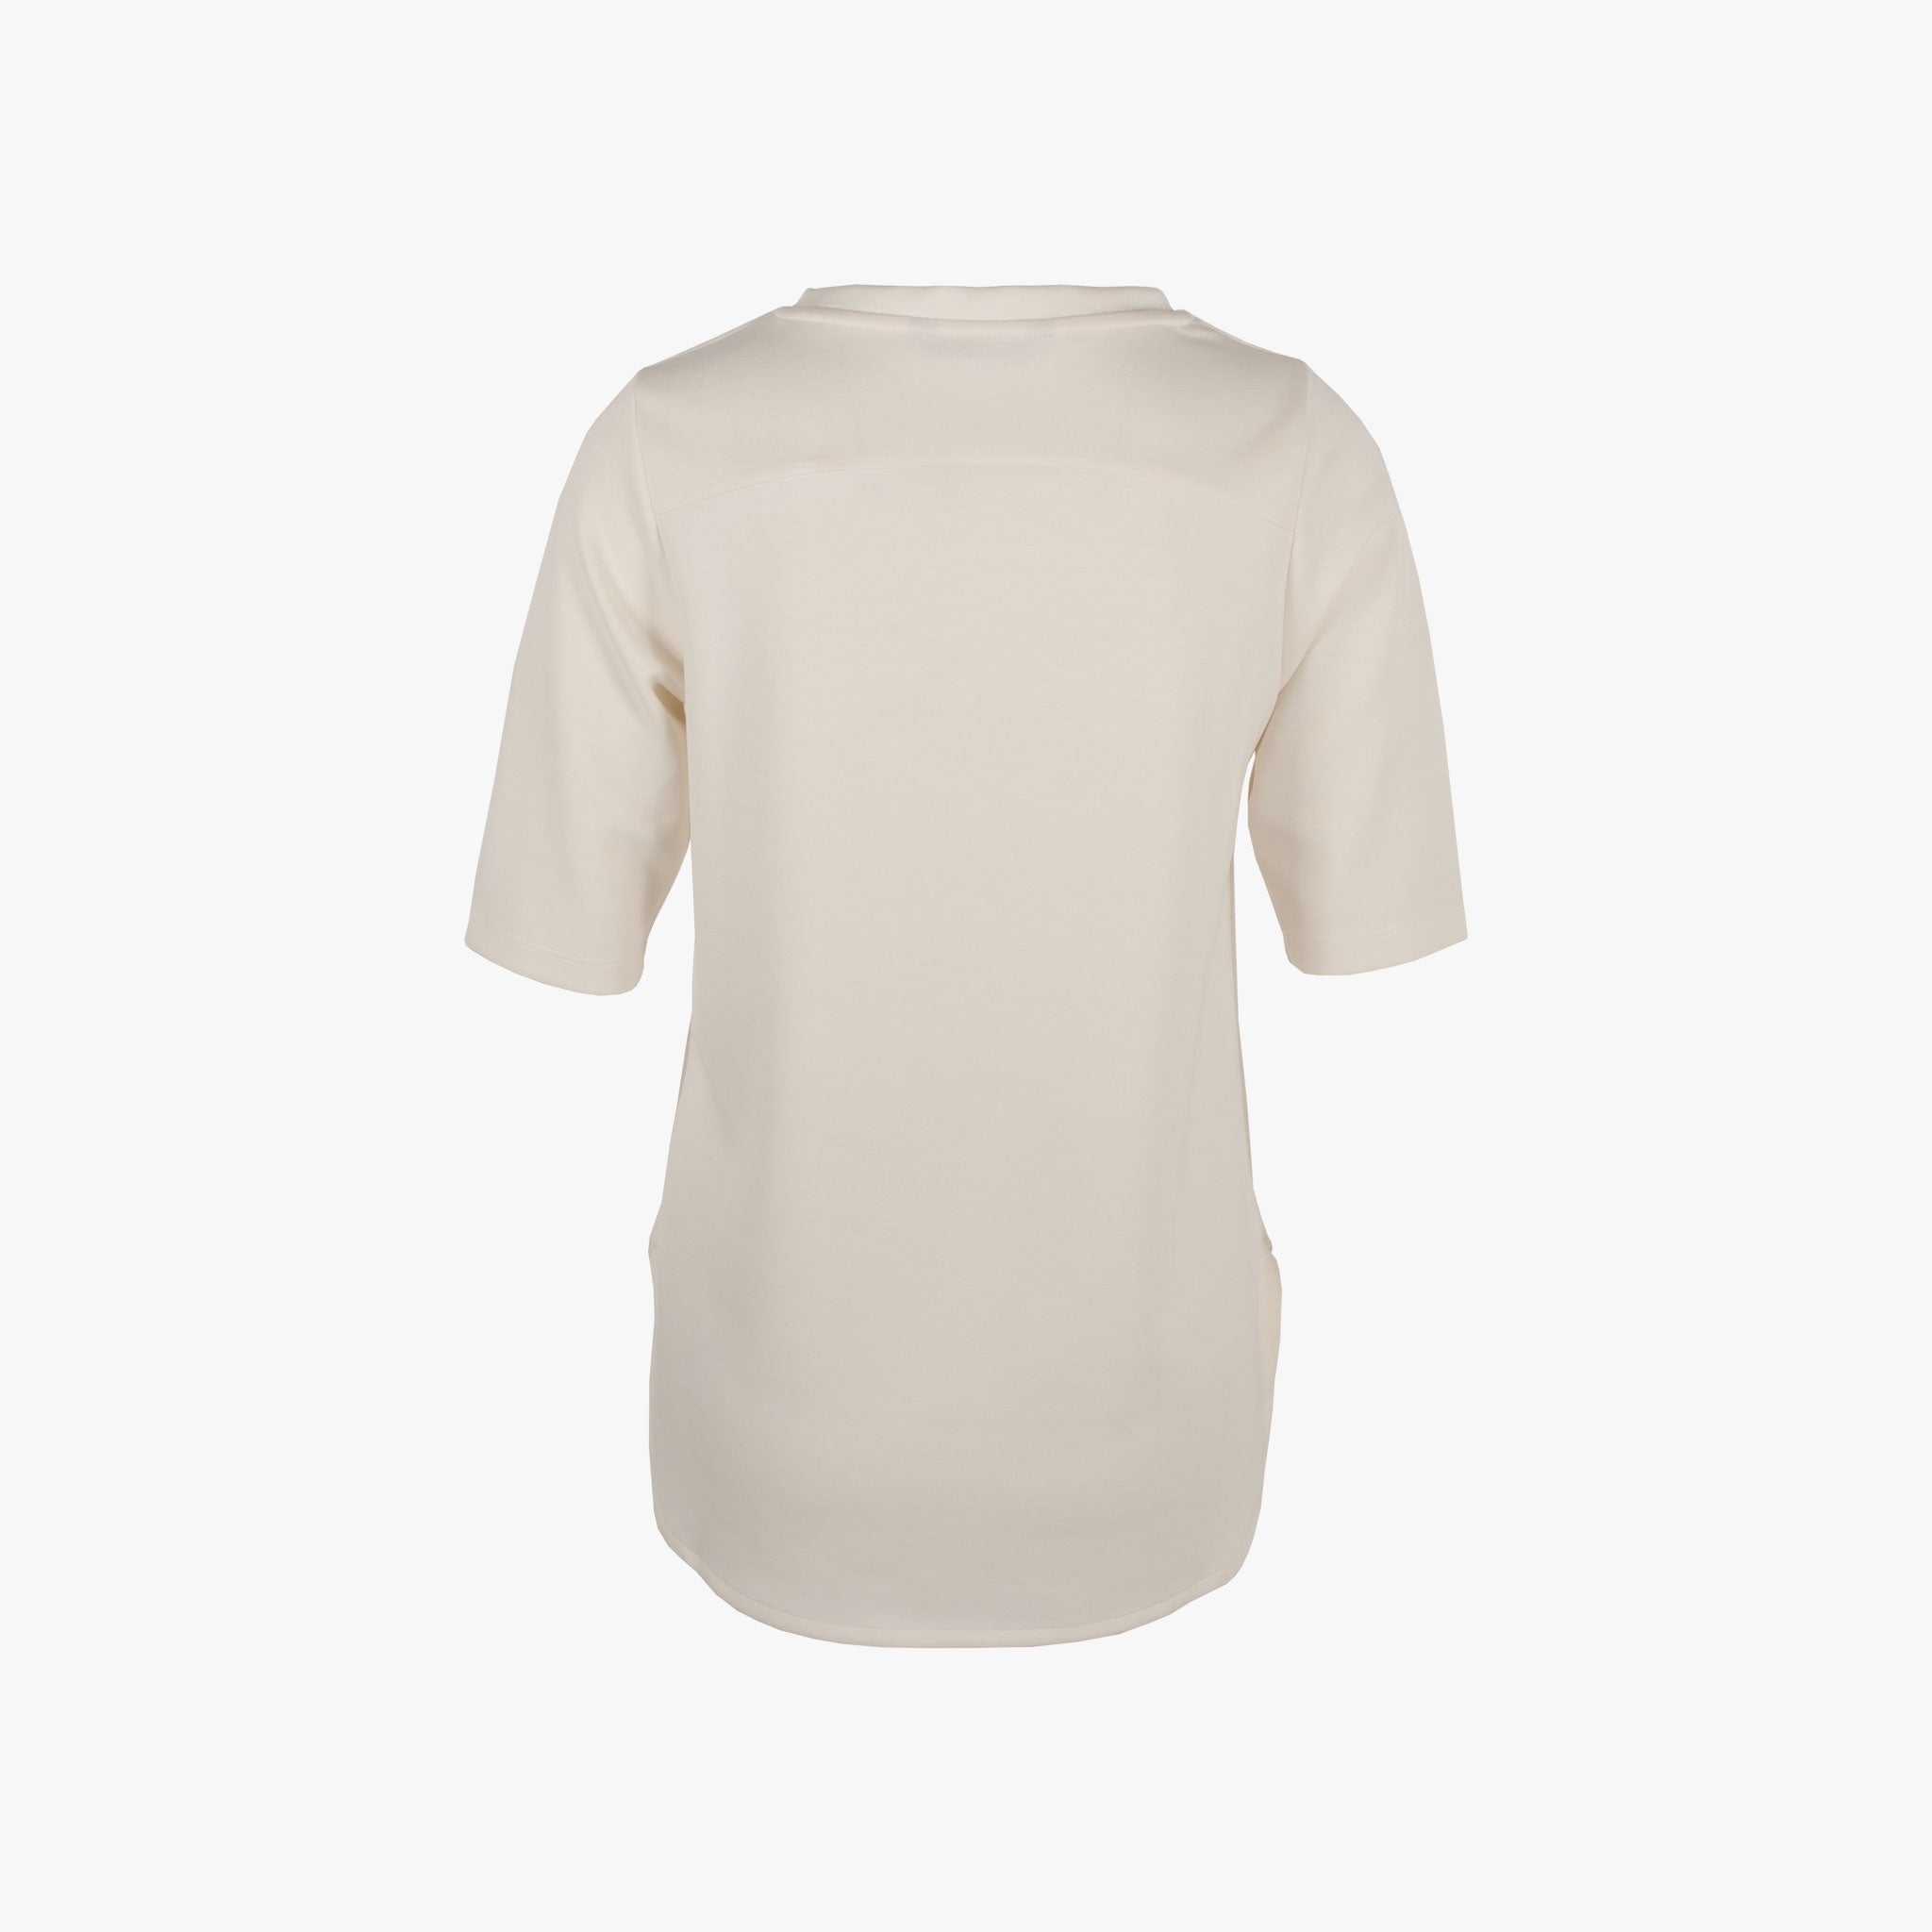 1/2 RH-Shirt schmal | offwhite